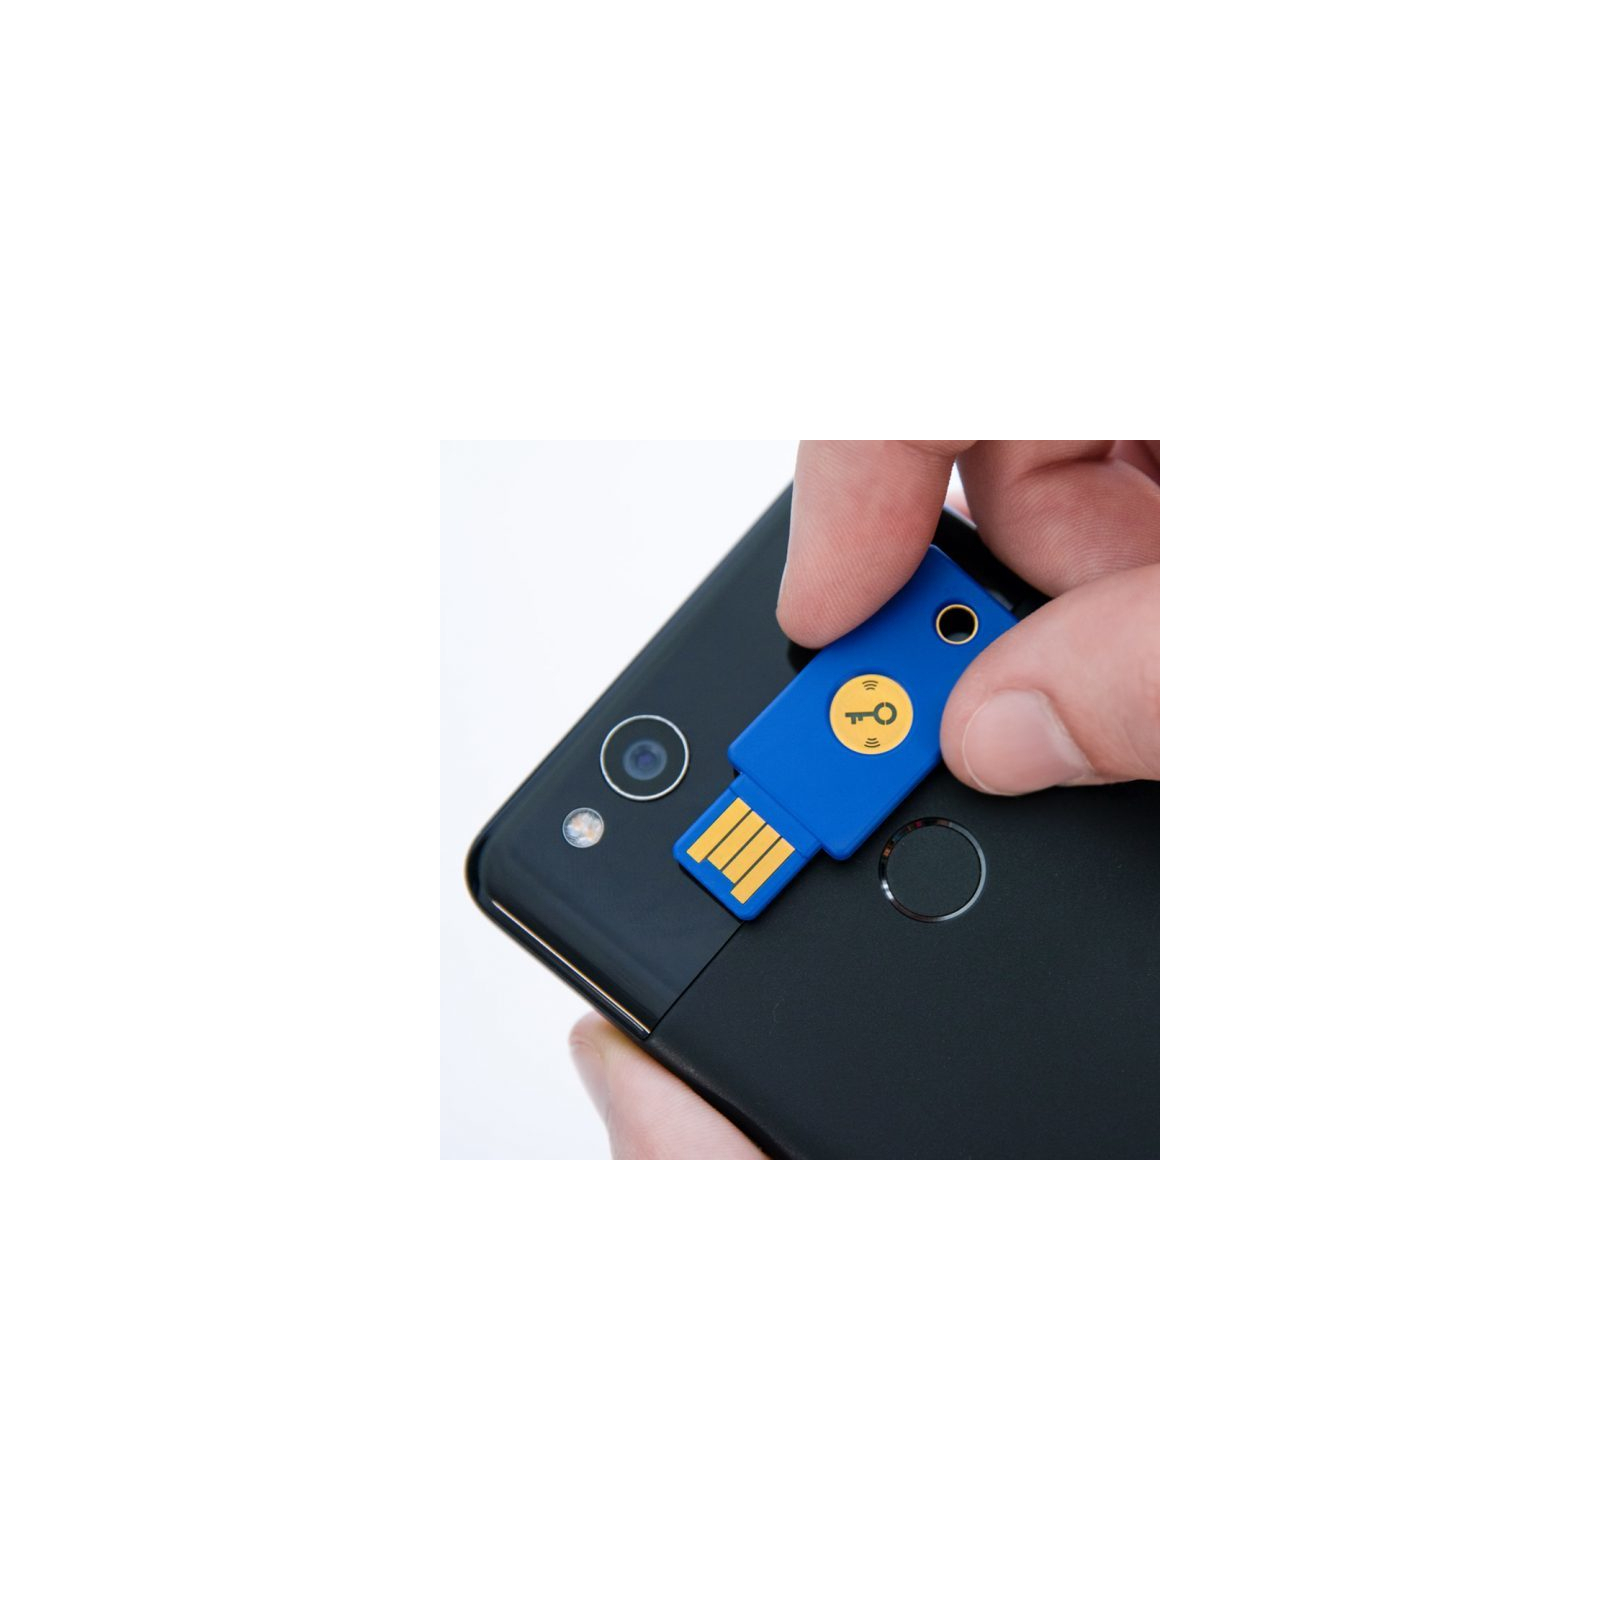 Апаратний ключ безпеки Yubico Security Key NFC (SecurityKey_NFC) зображення 5